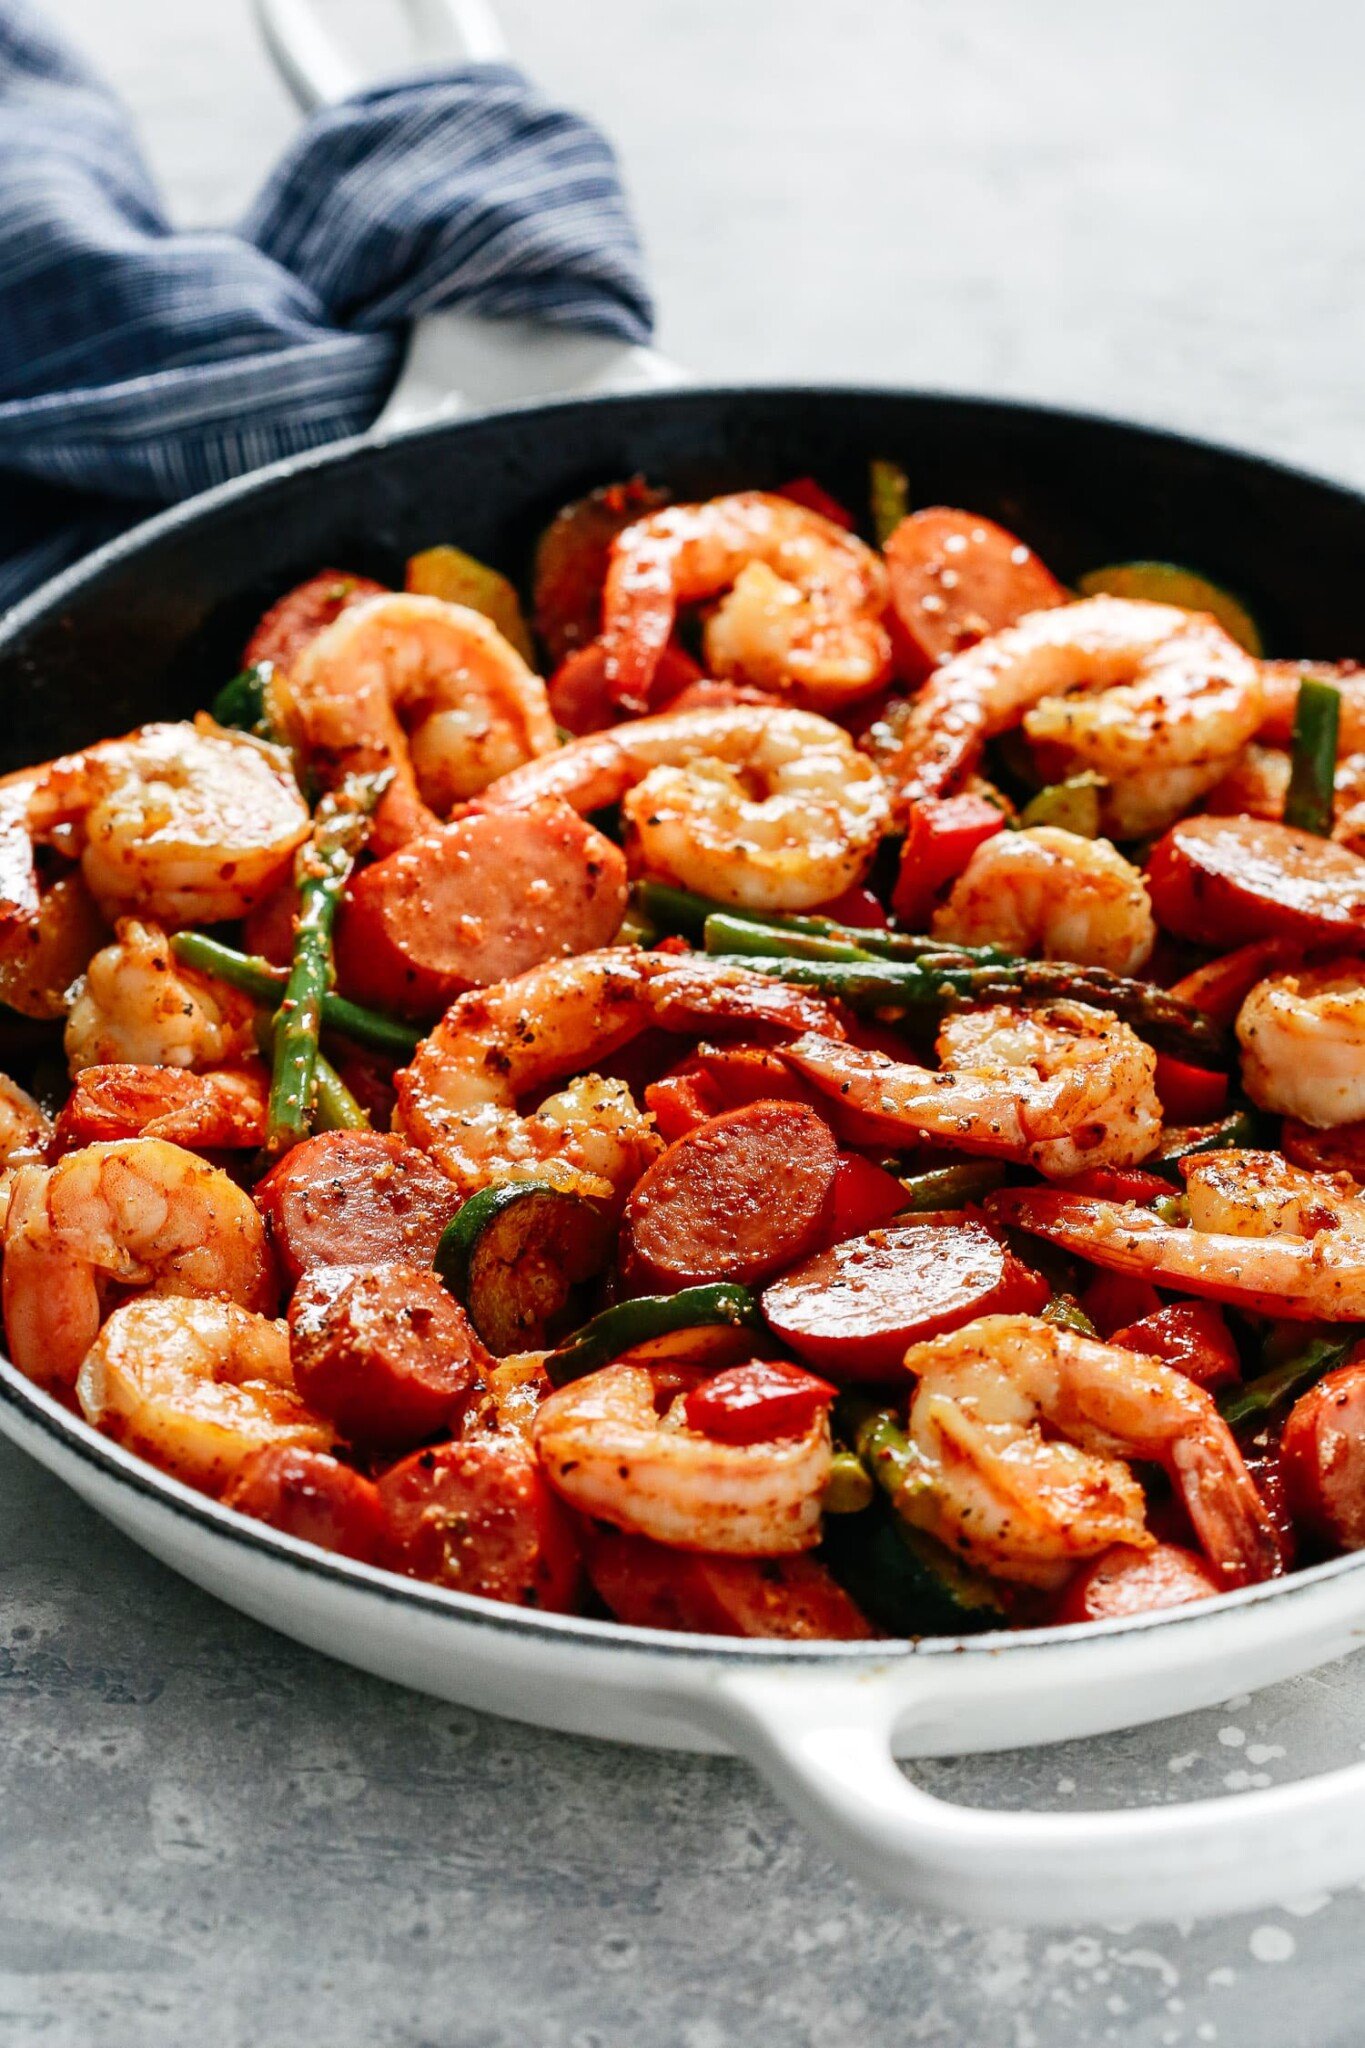 https://www.primaverakitchen.com/wp-content/uploads/2019/04/Shrimp-and-Sausage-Vegetable-Skillet-Primavera-Kitchen-2-scaled.jpg